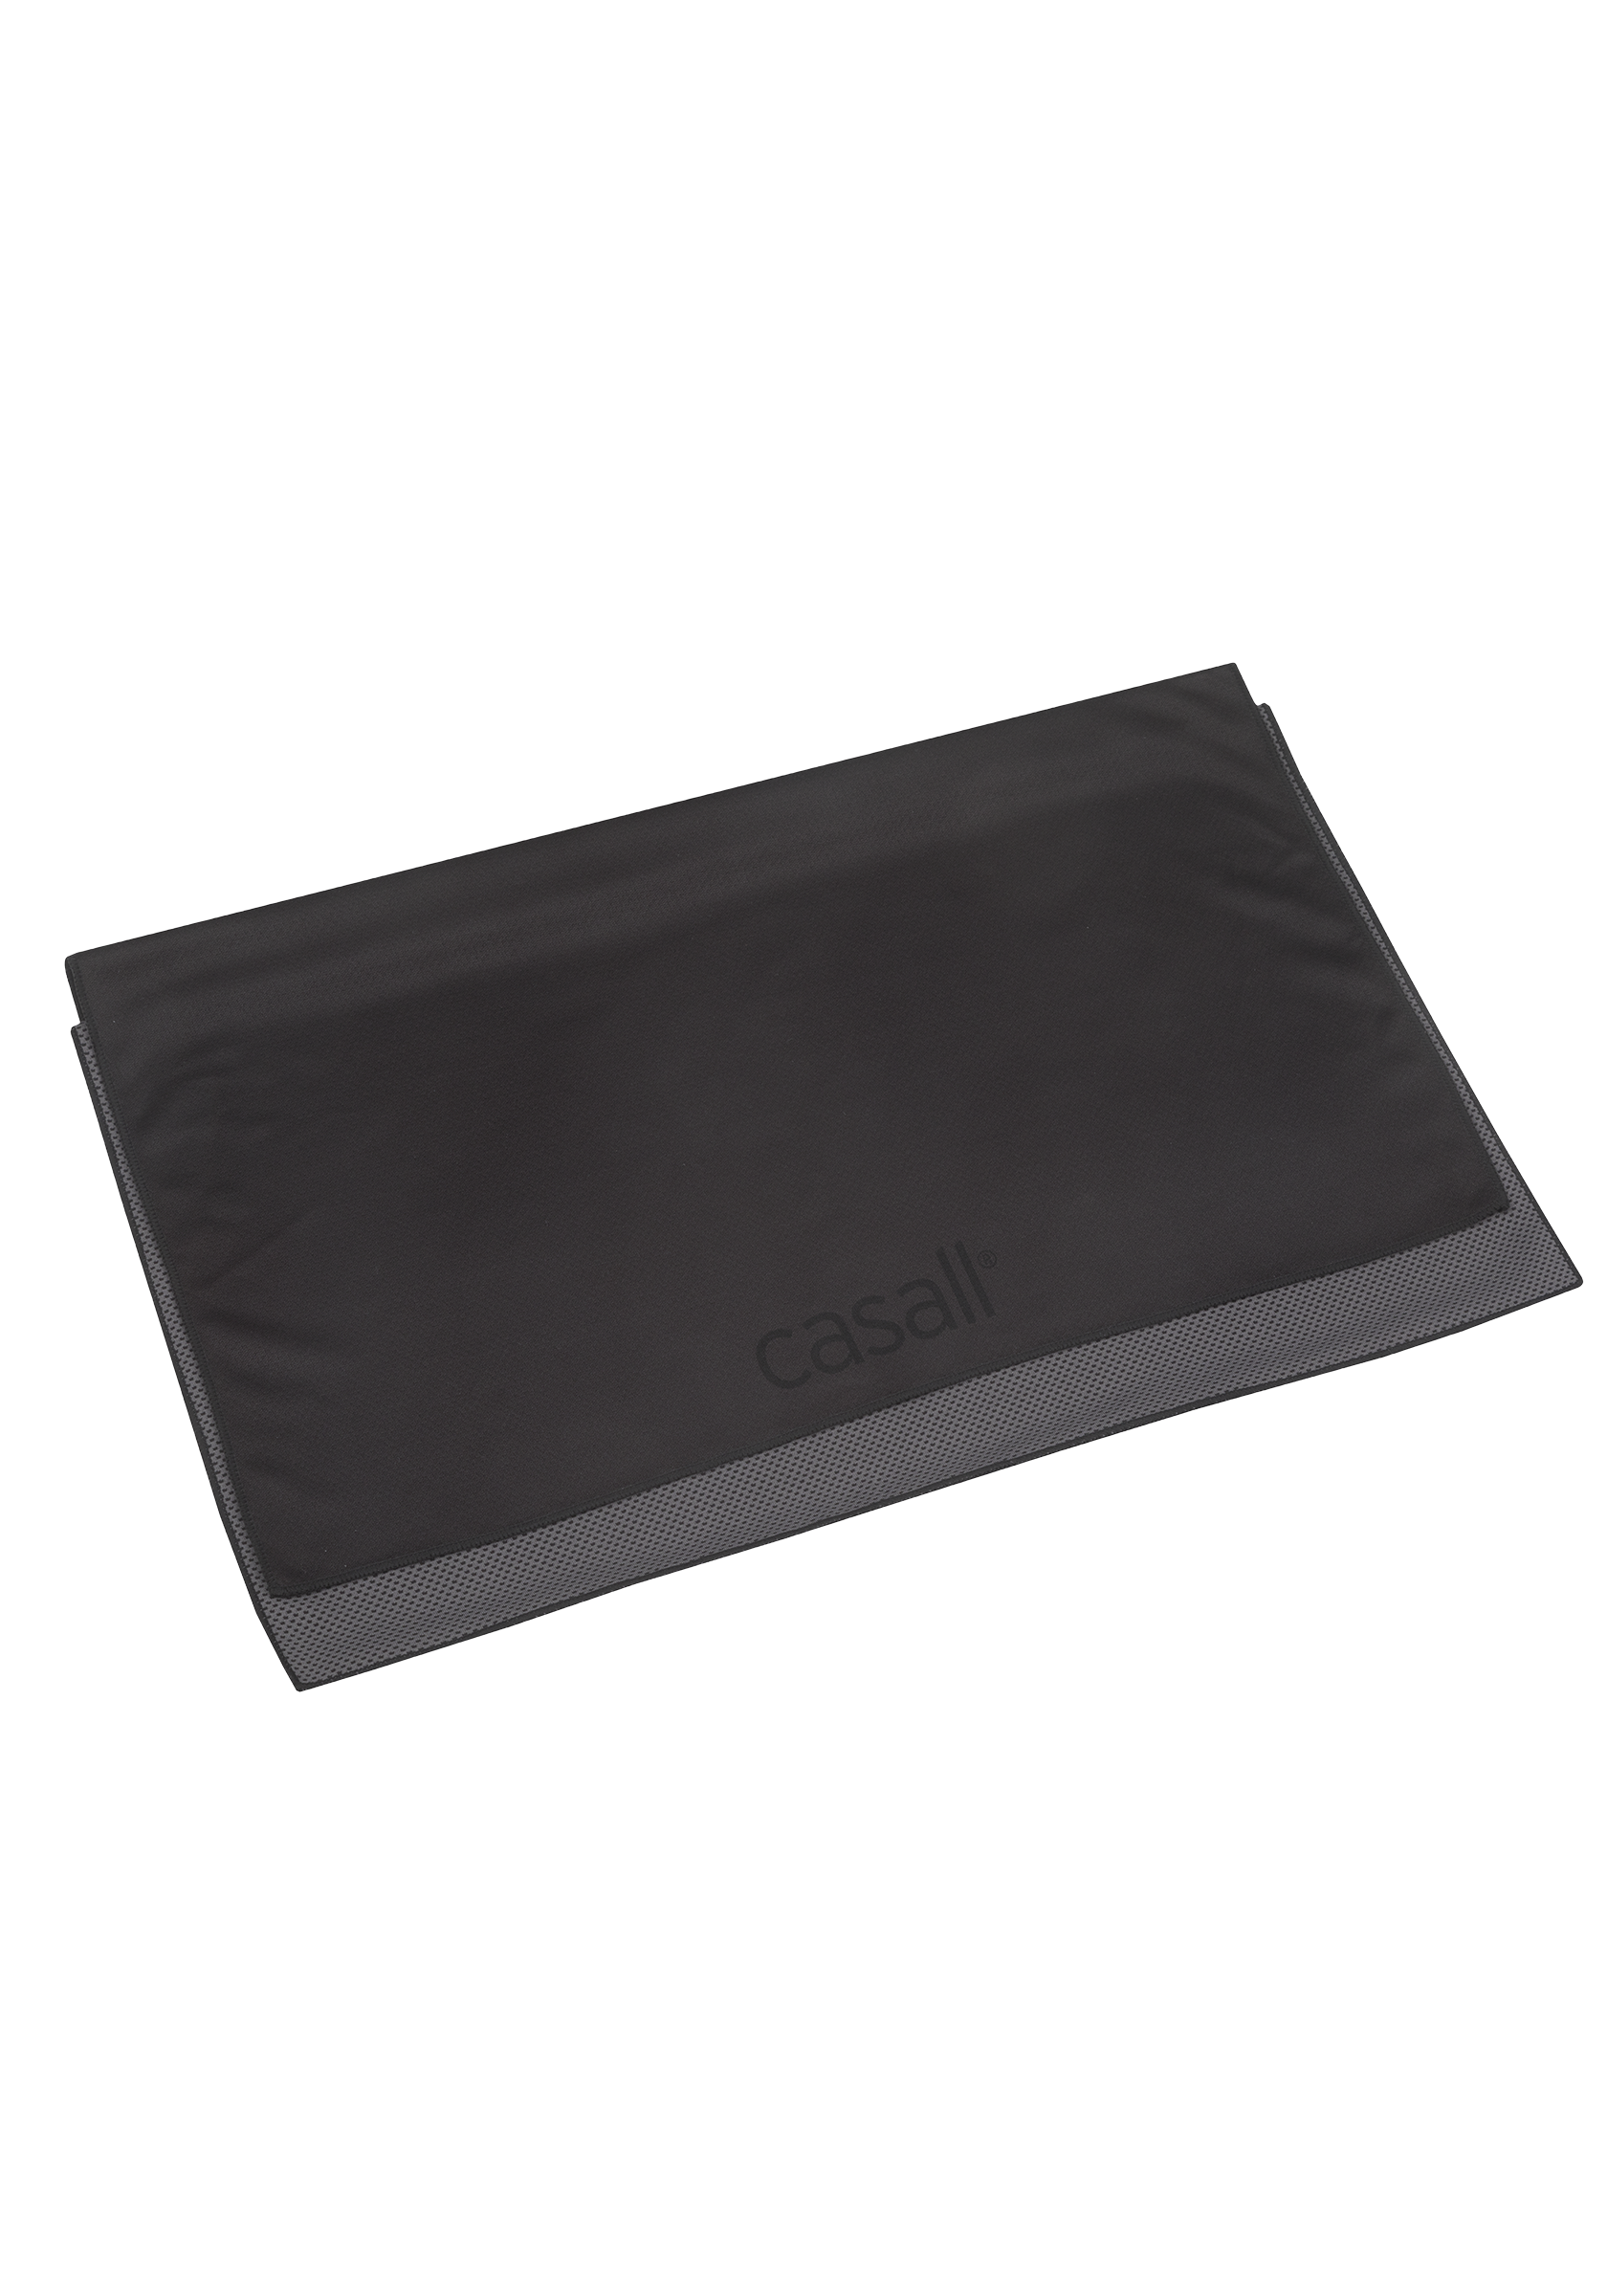 Travel towel 120x70cm - Black/grey